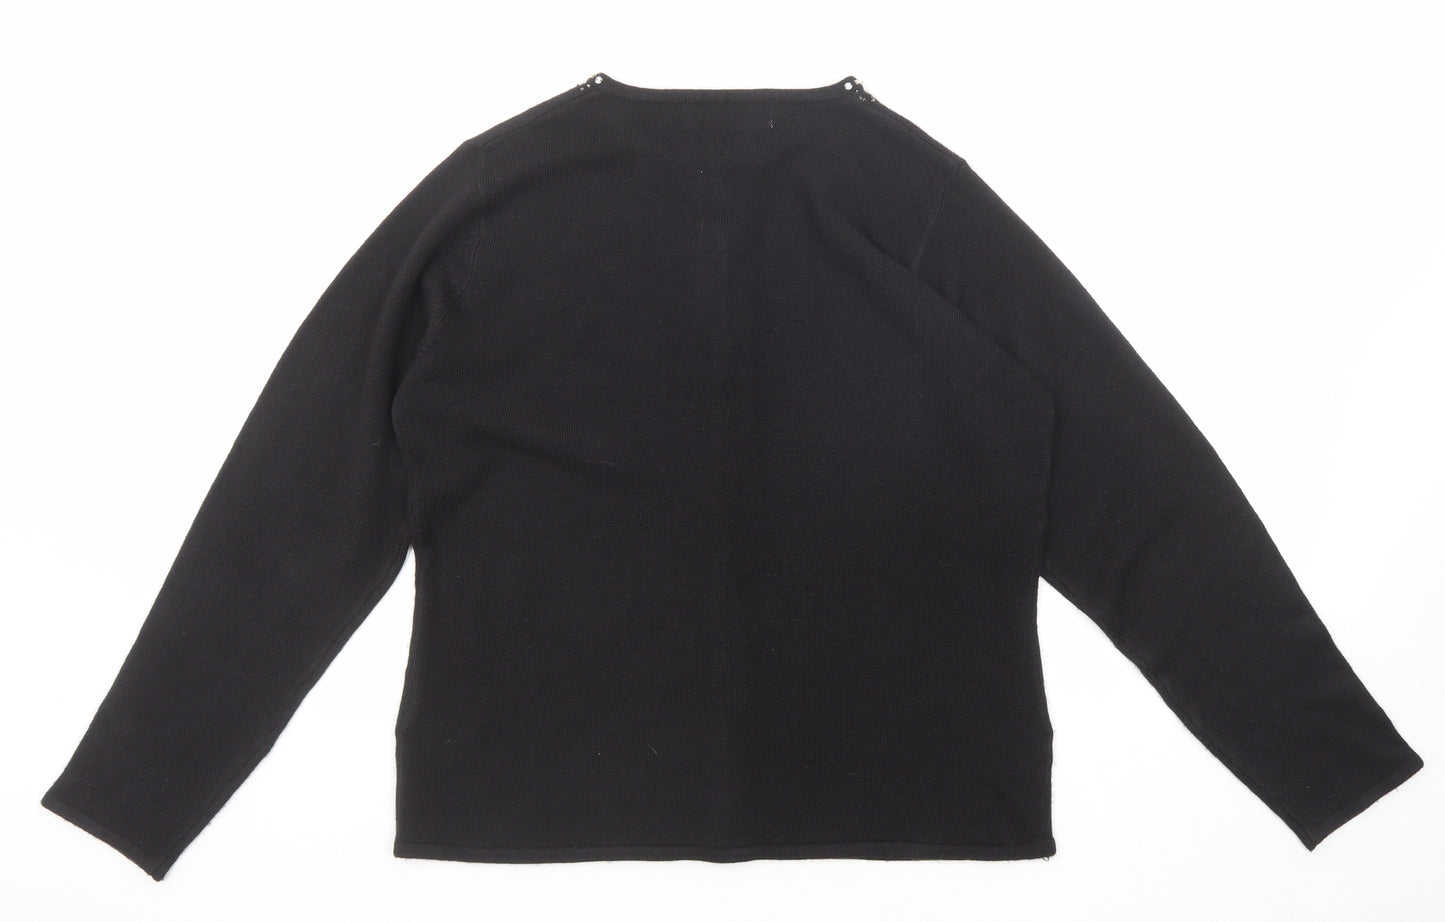 EWM Womens Black Round Neck Acrylic Cardigan Jumper Size 14 - Size 14-16